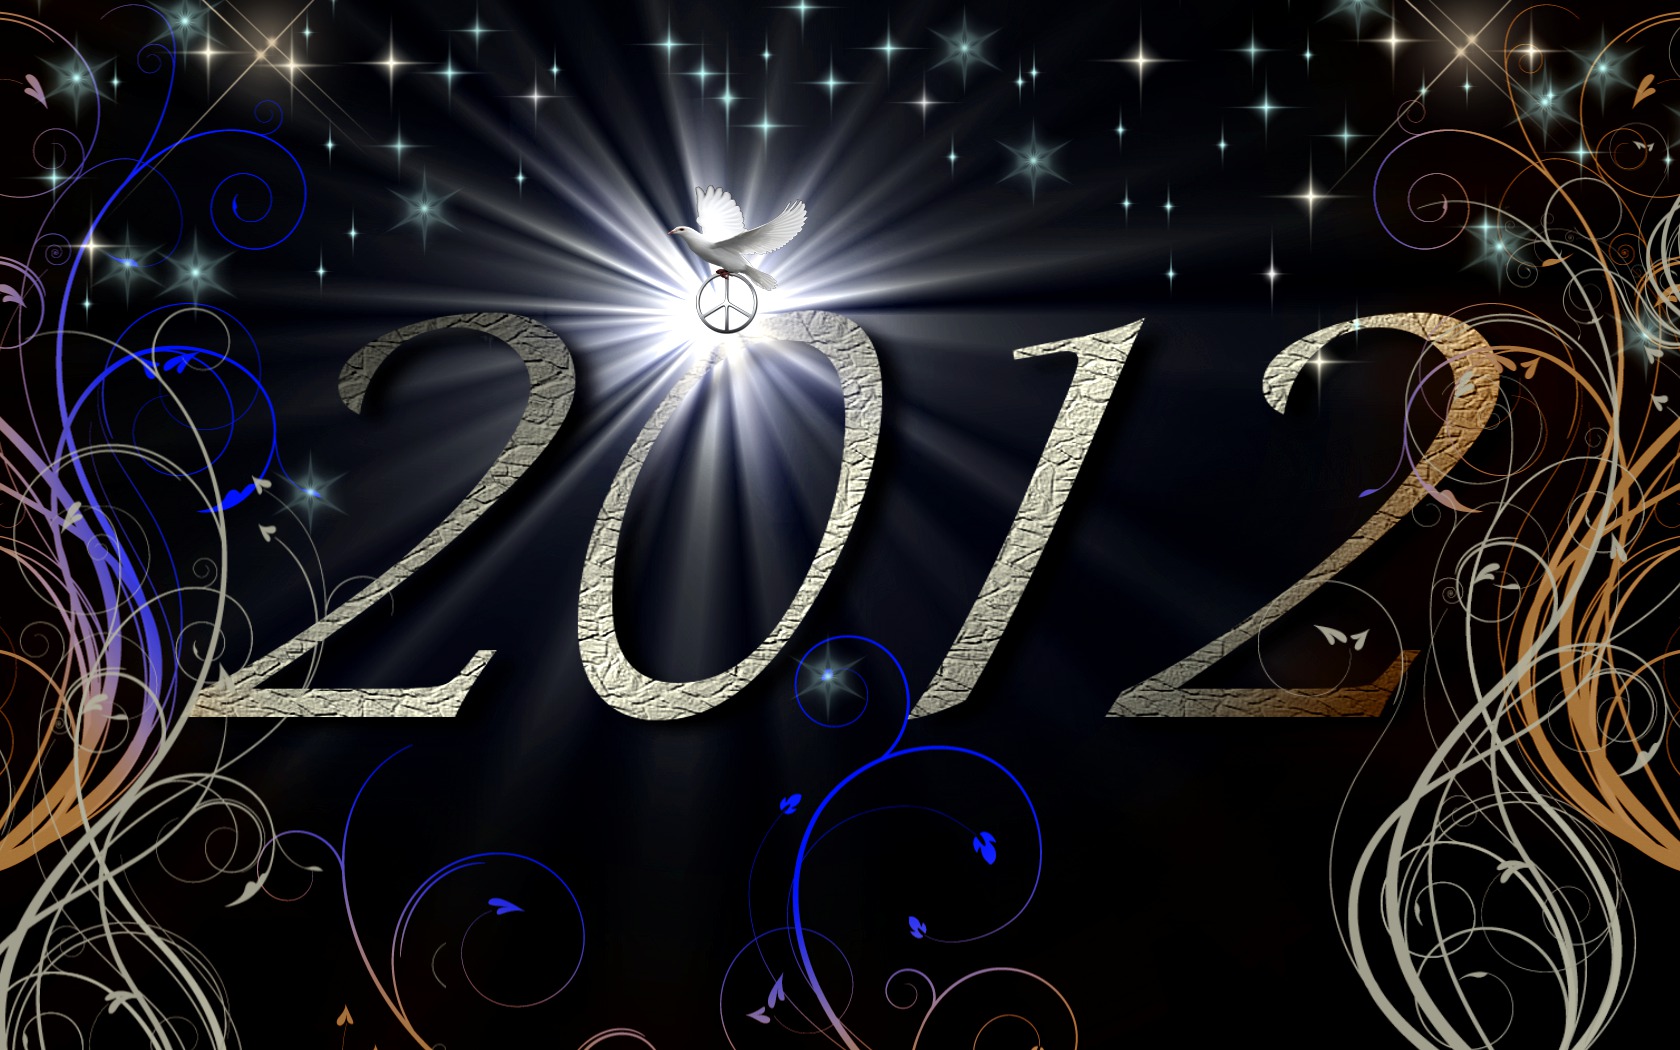 holiday, new year 2012